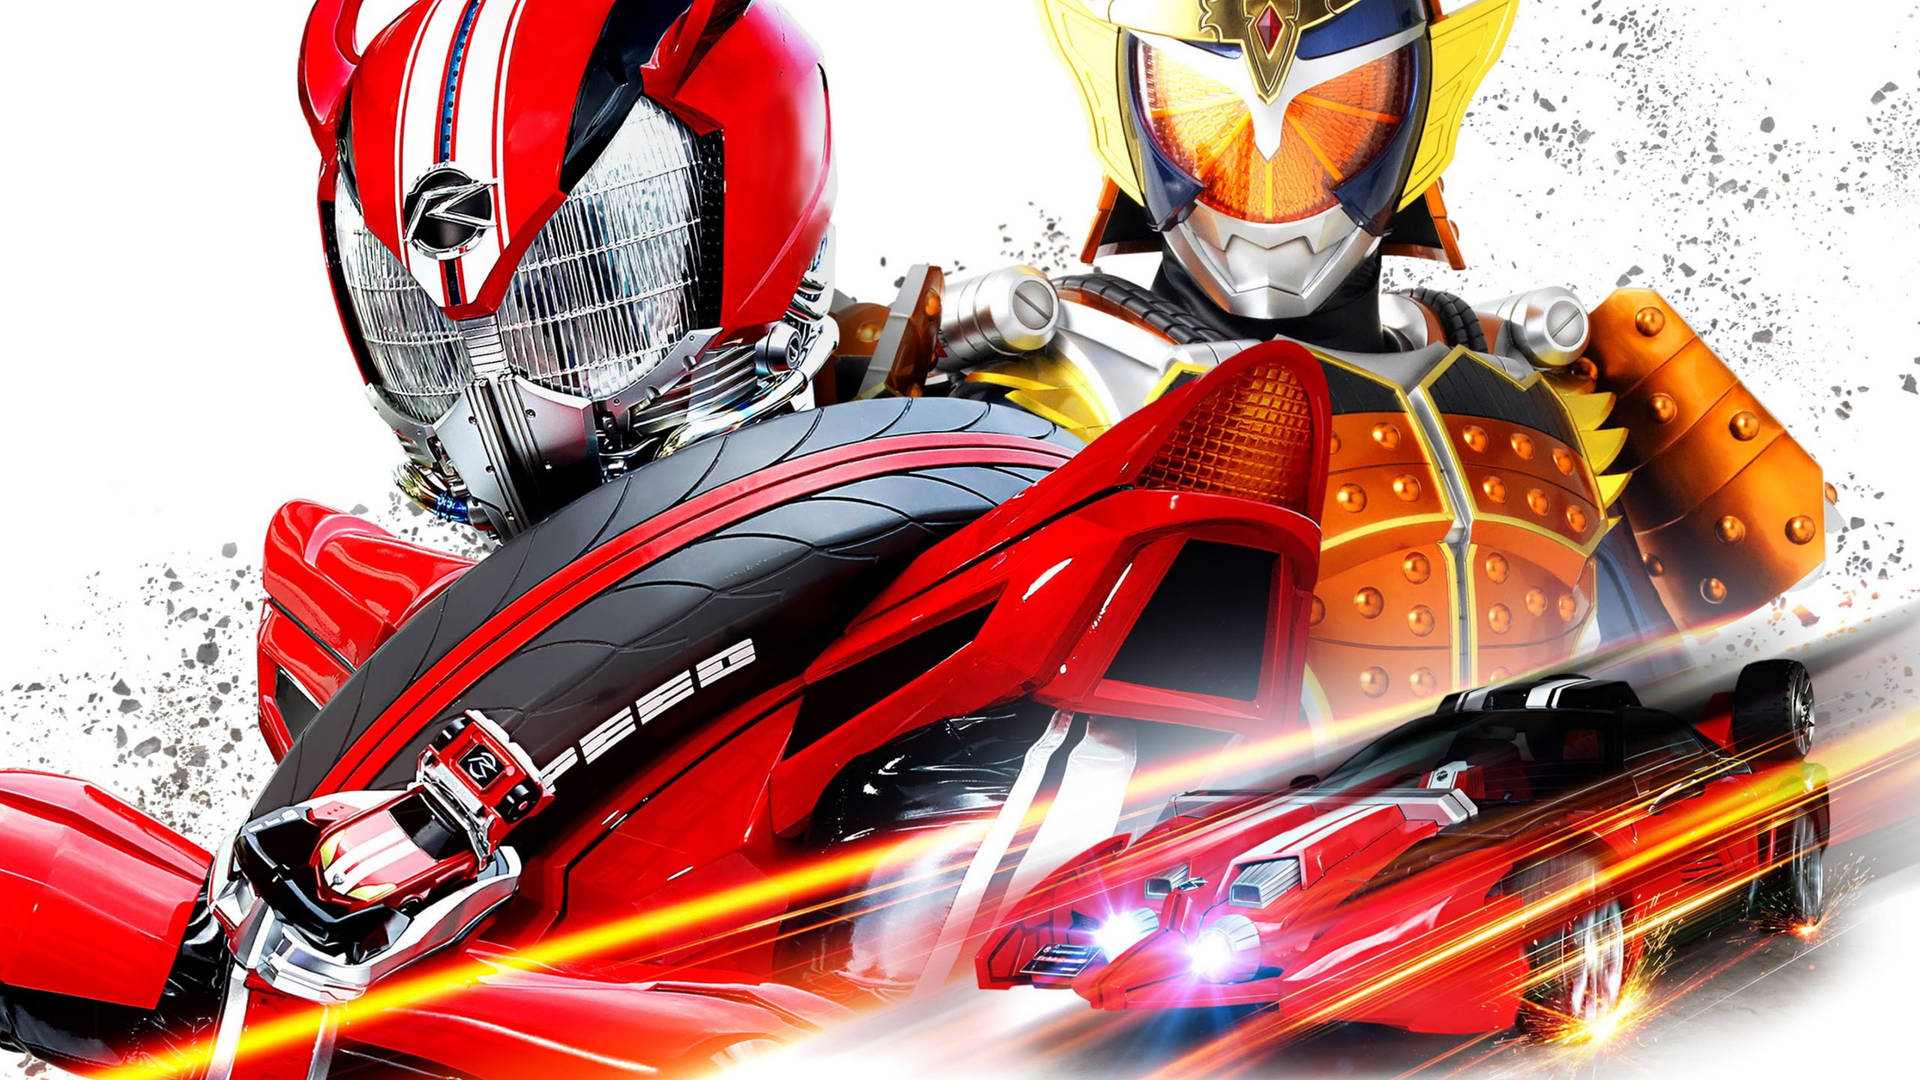 Cool Japanese Kamen Rider Background